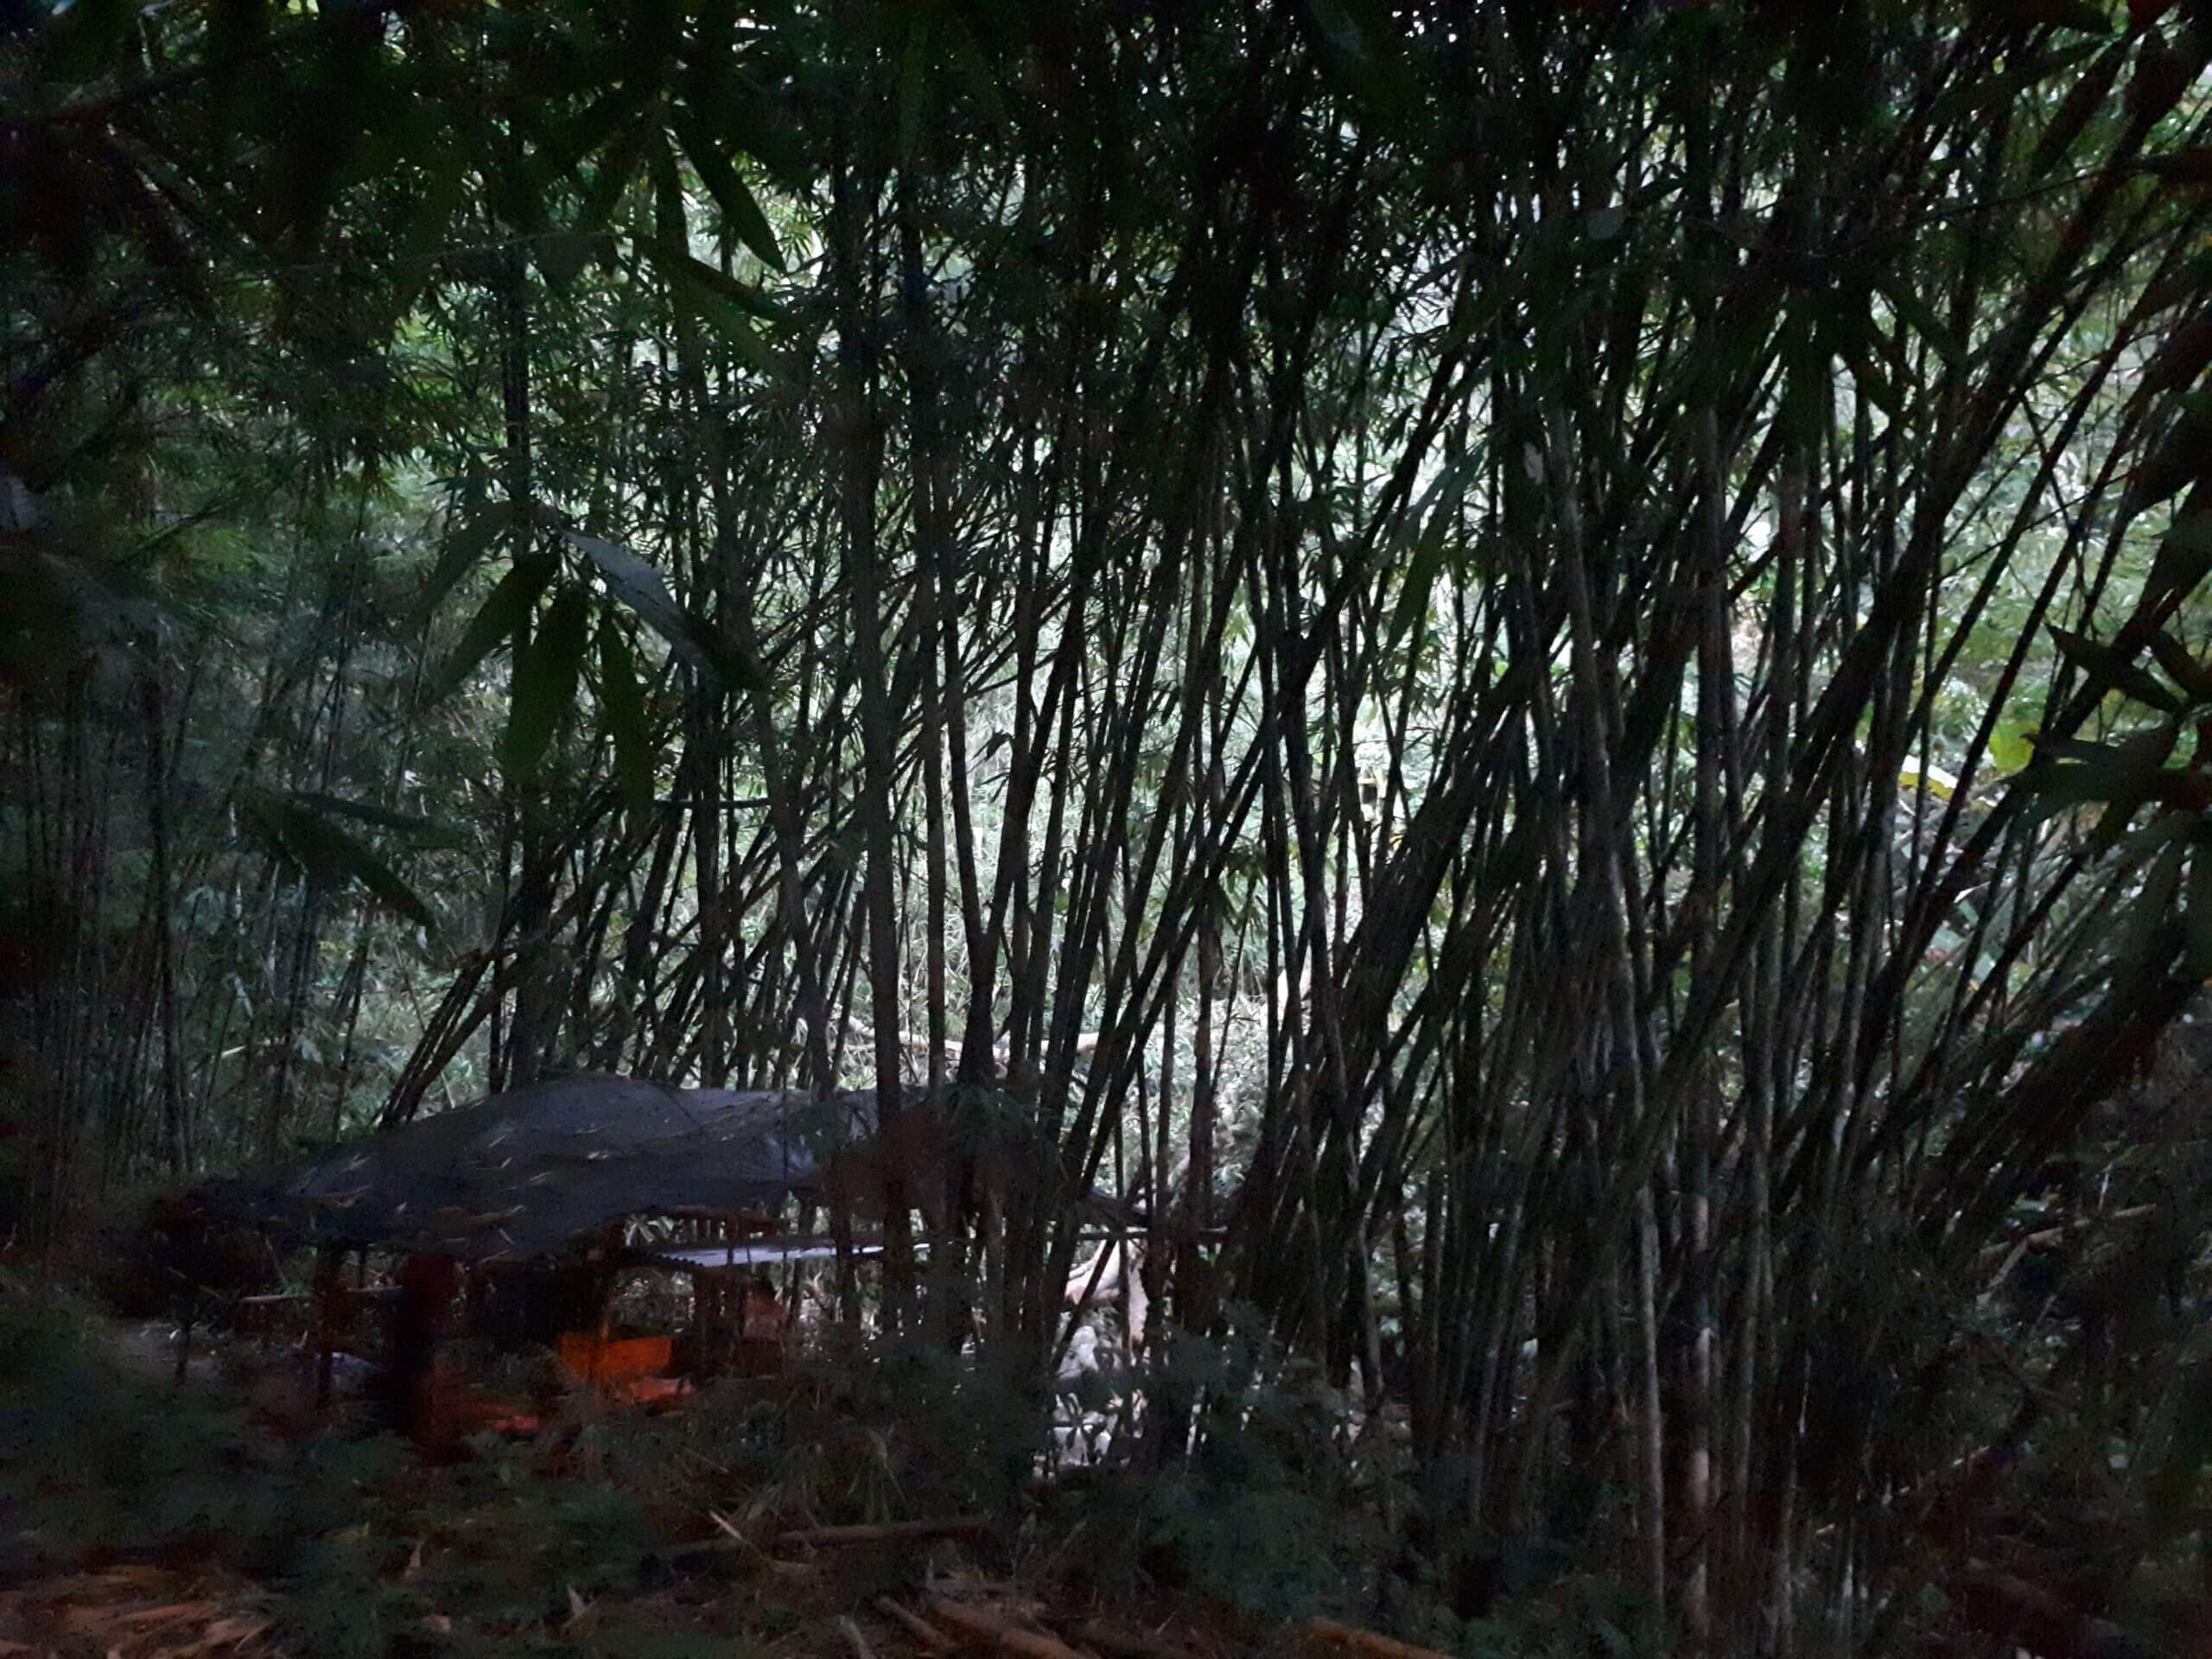 foret de bambou a bali